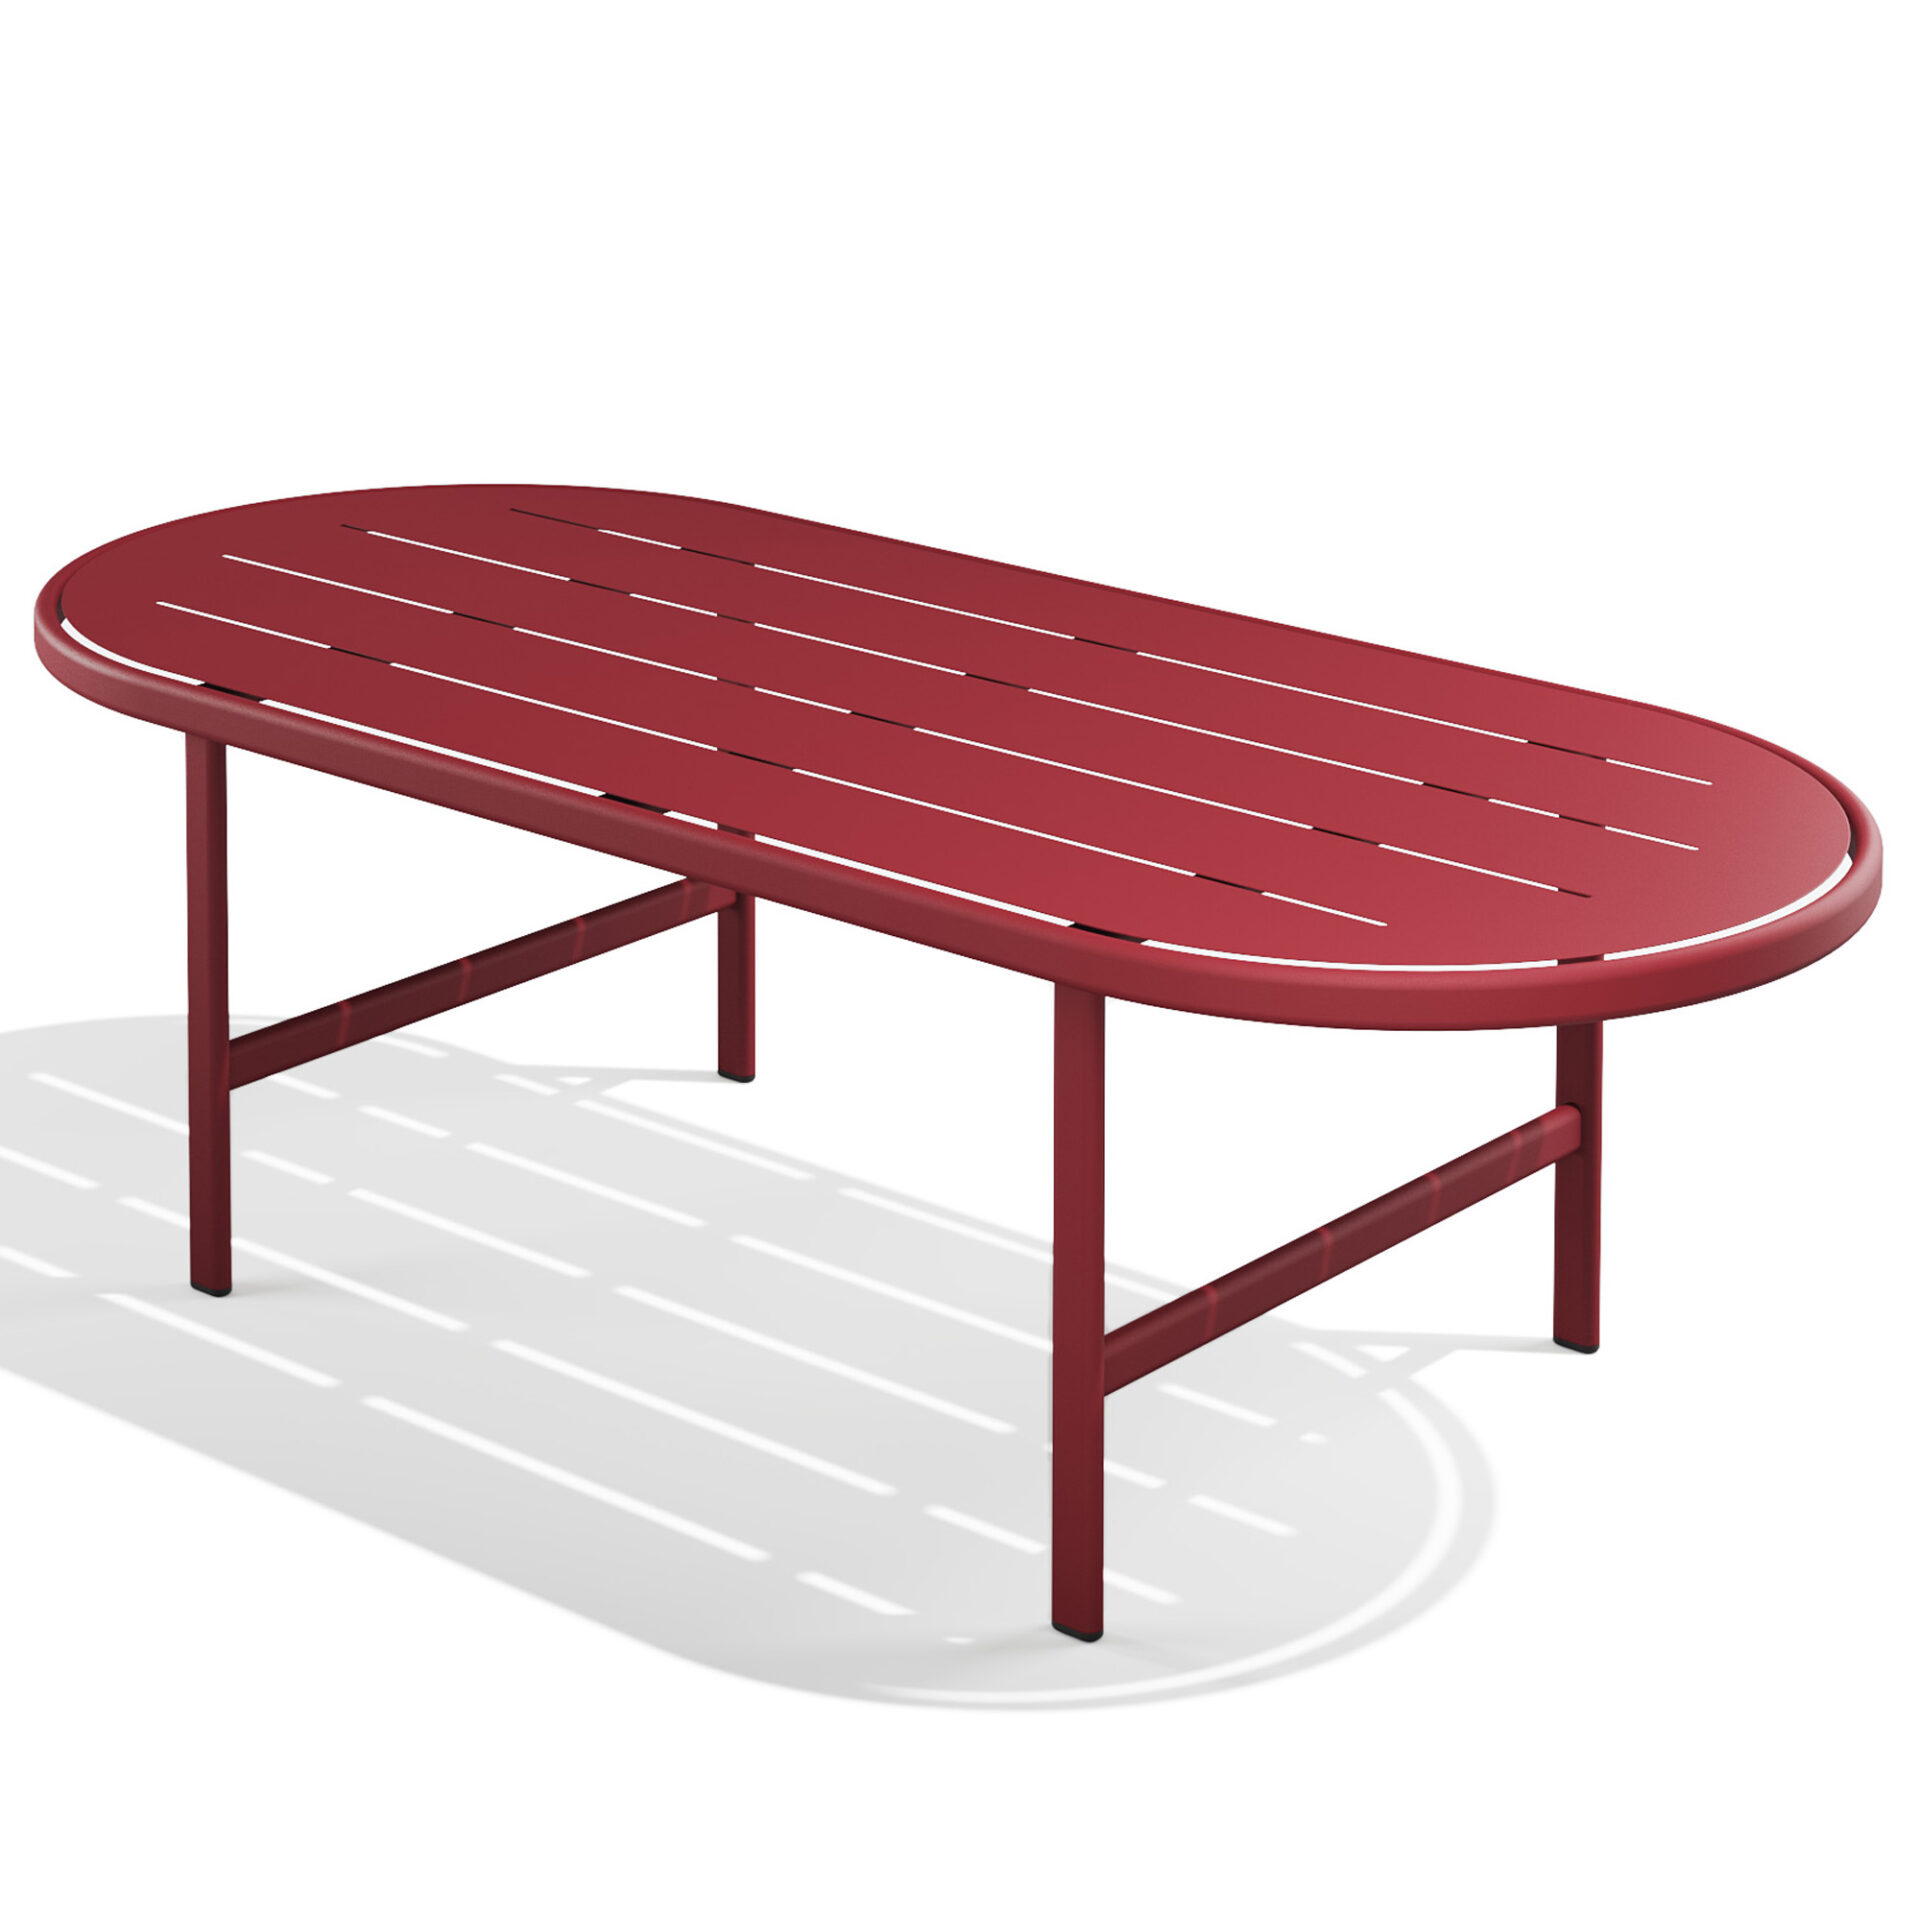 kano-rectangular-table-250